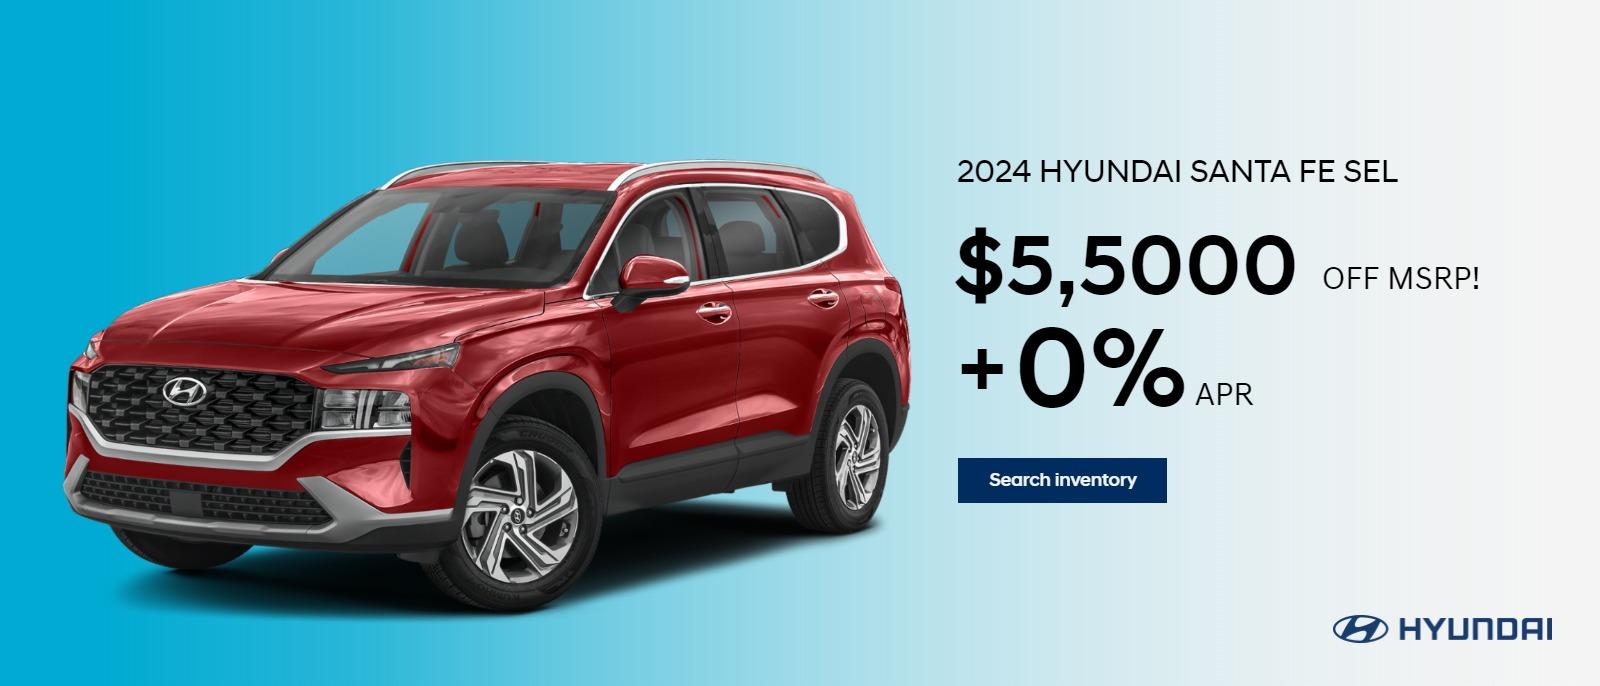 2024 Hyundai Santa Fe SEL
$5500 OFF MSRP!
+ 0% APR